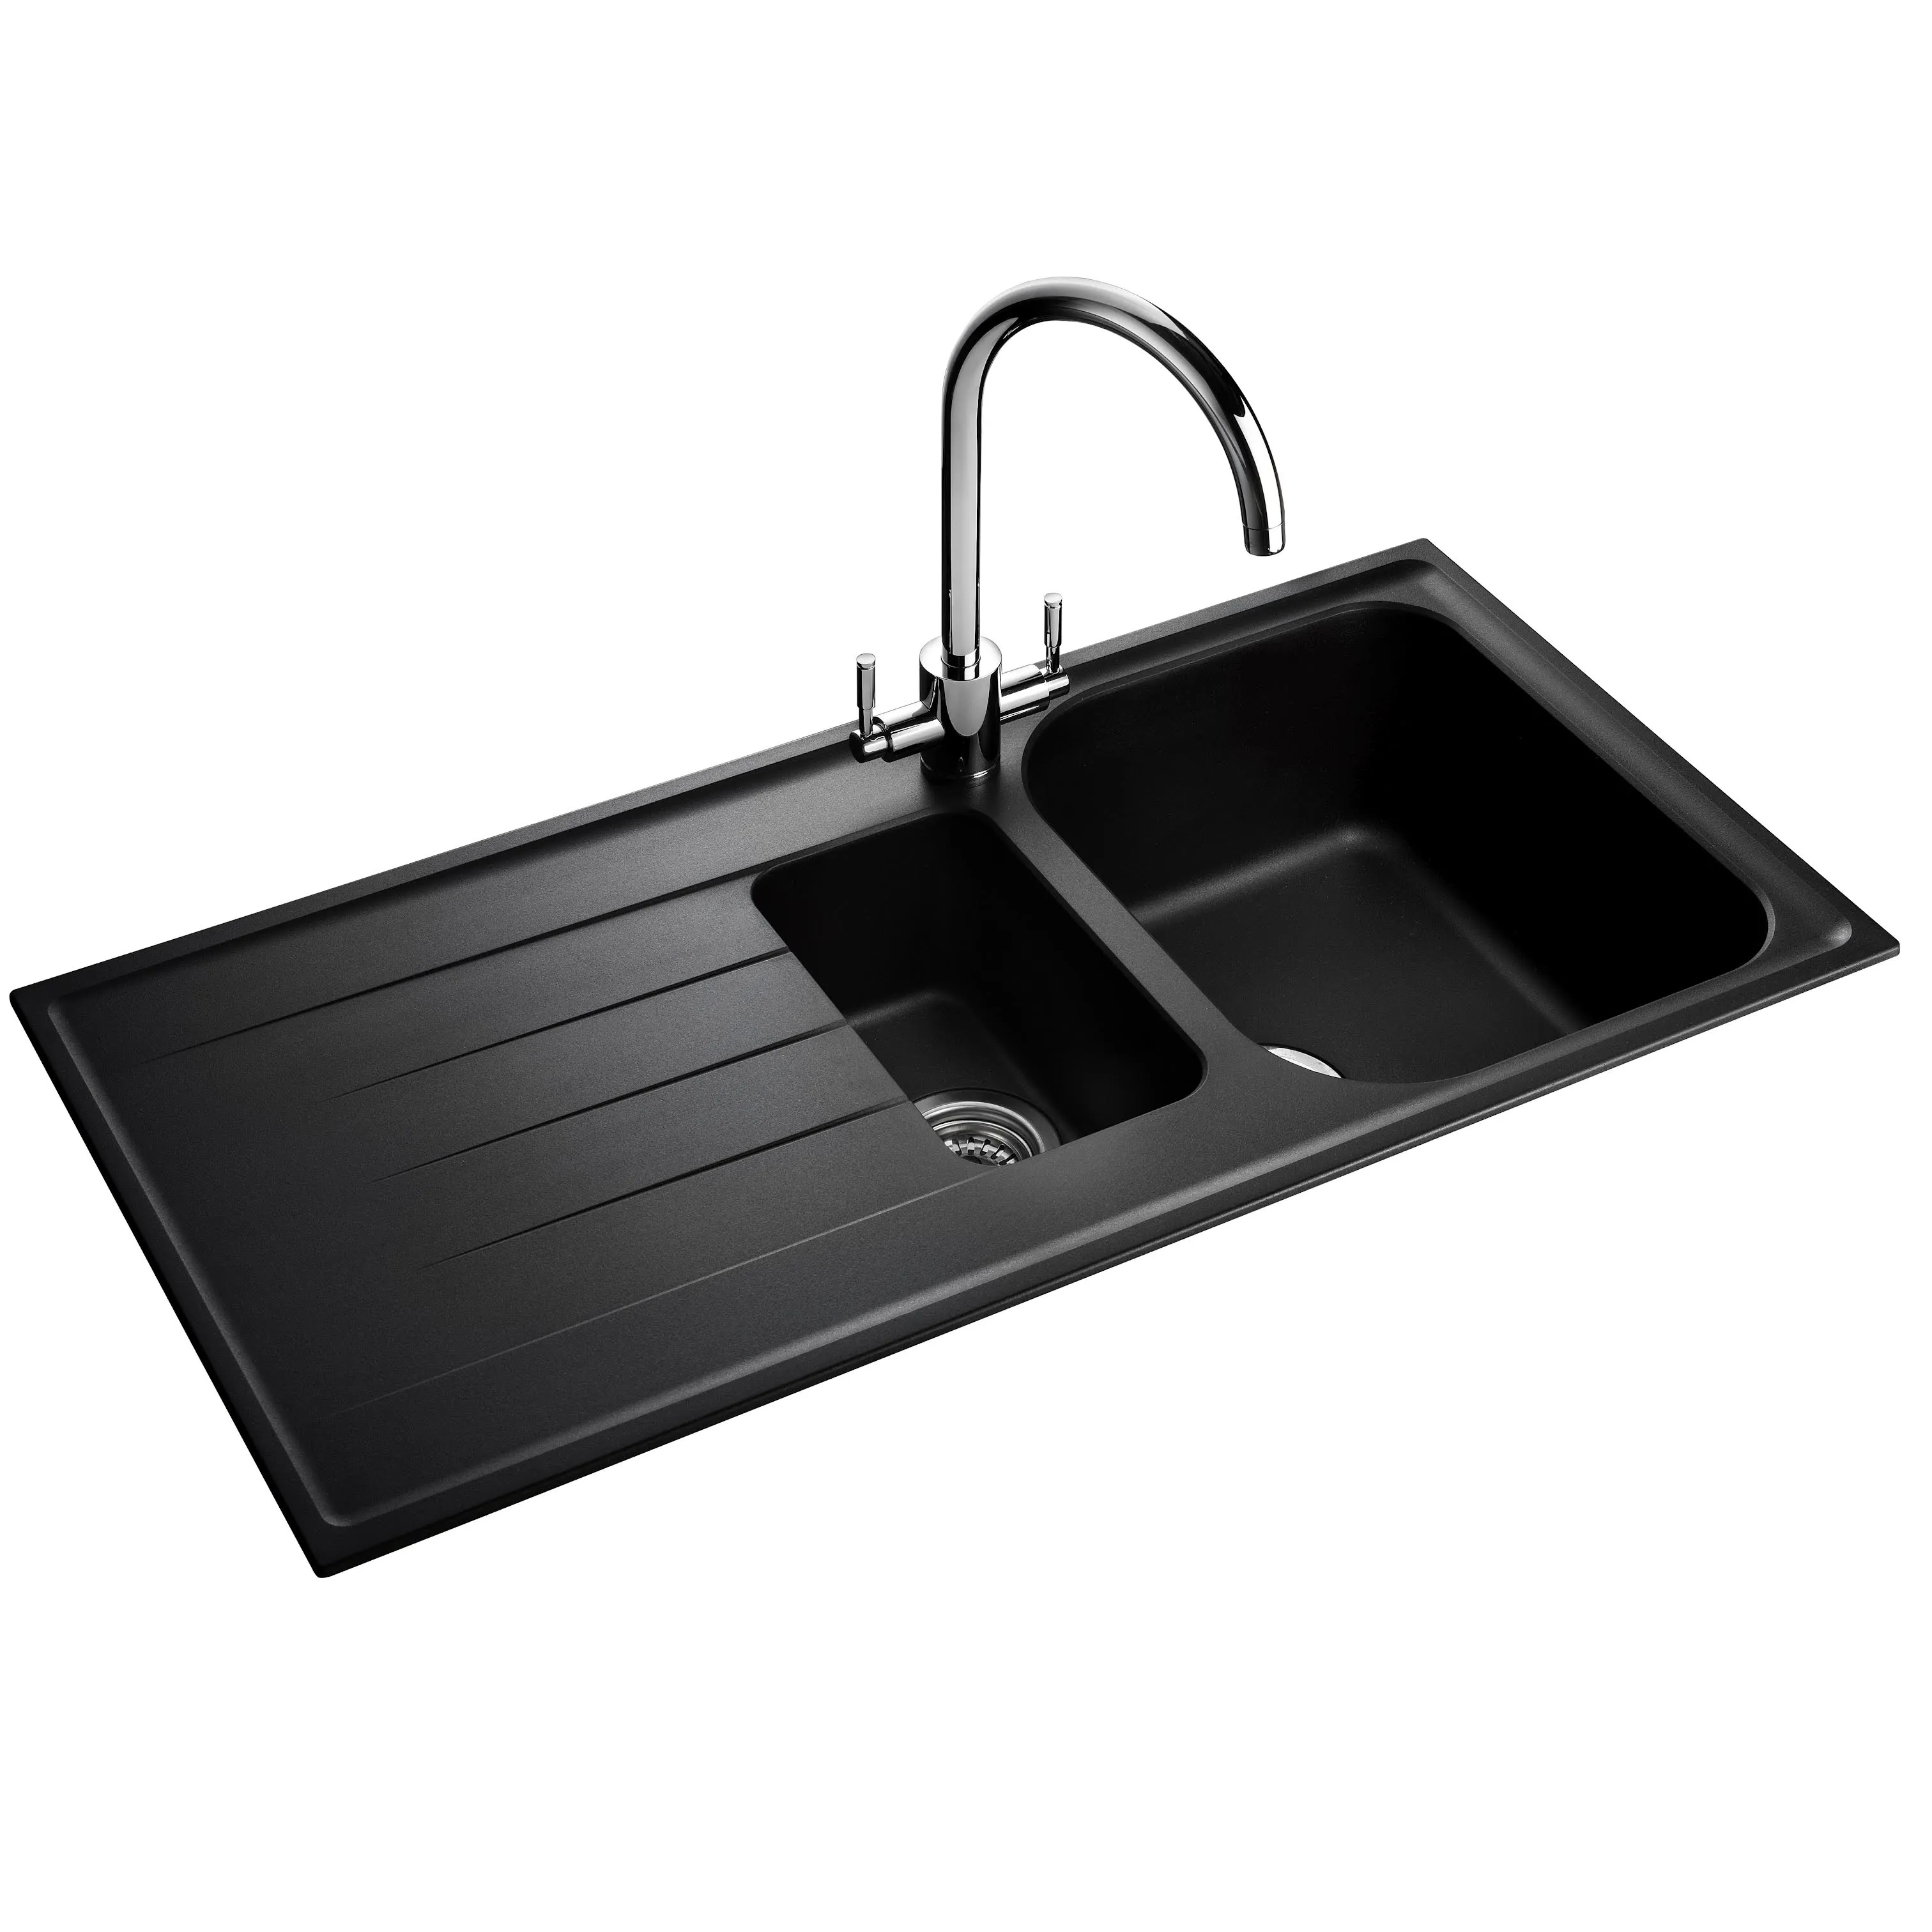 Rangemaster Amethyst Igneous Granite Inset 1.5 Bowl Kitchen Sink with Waste - Ash Black